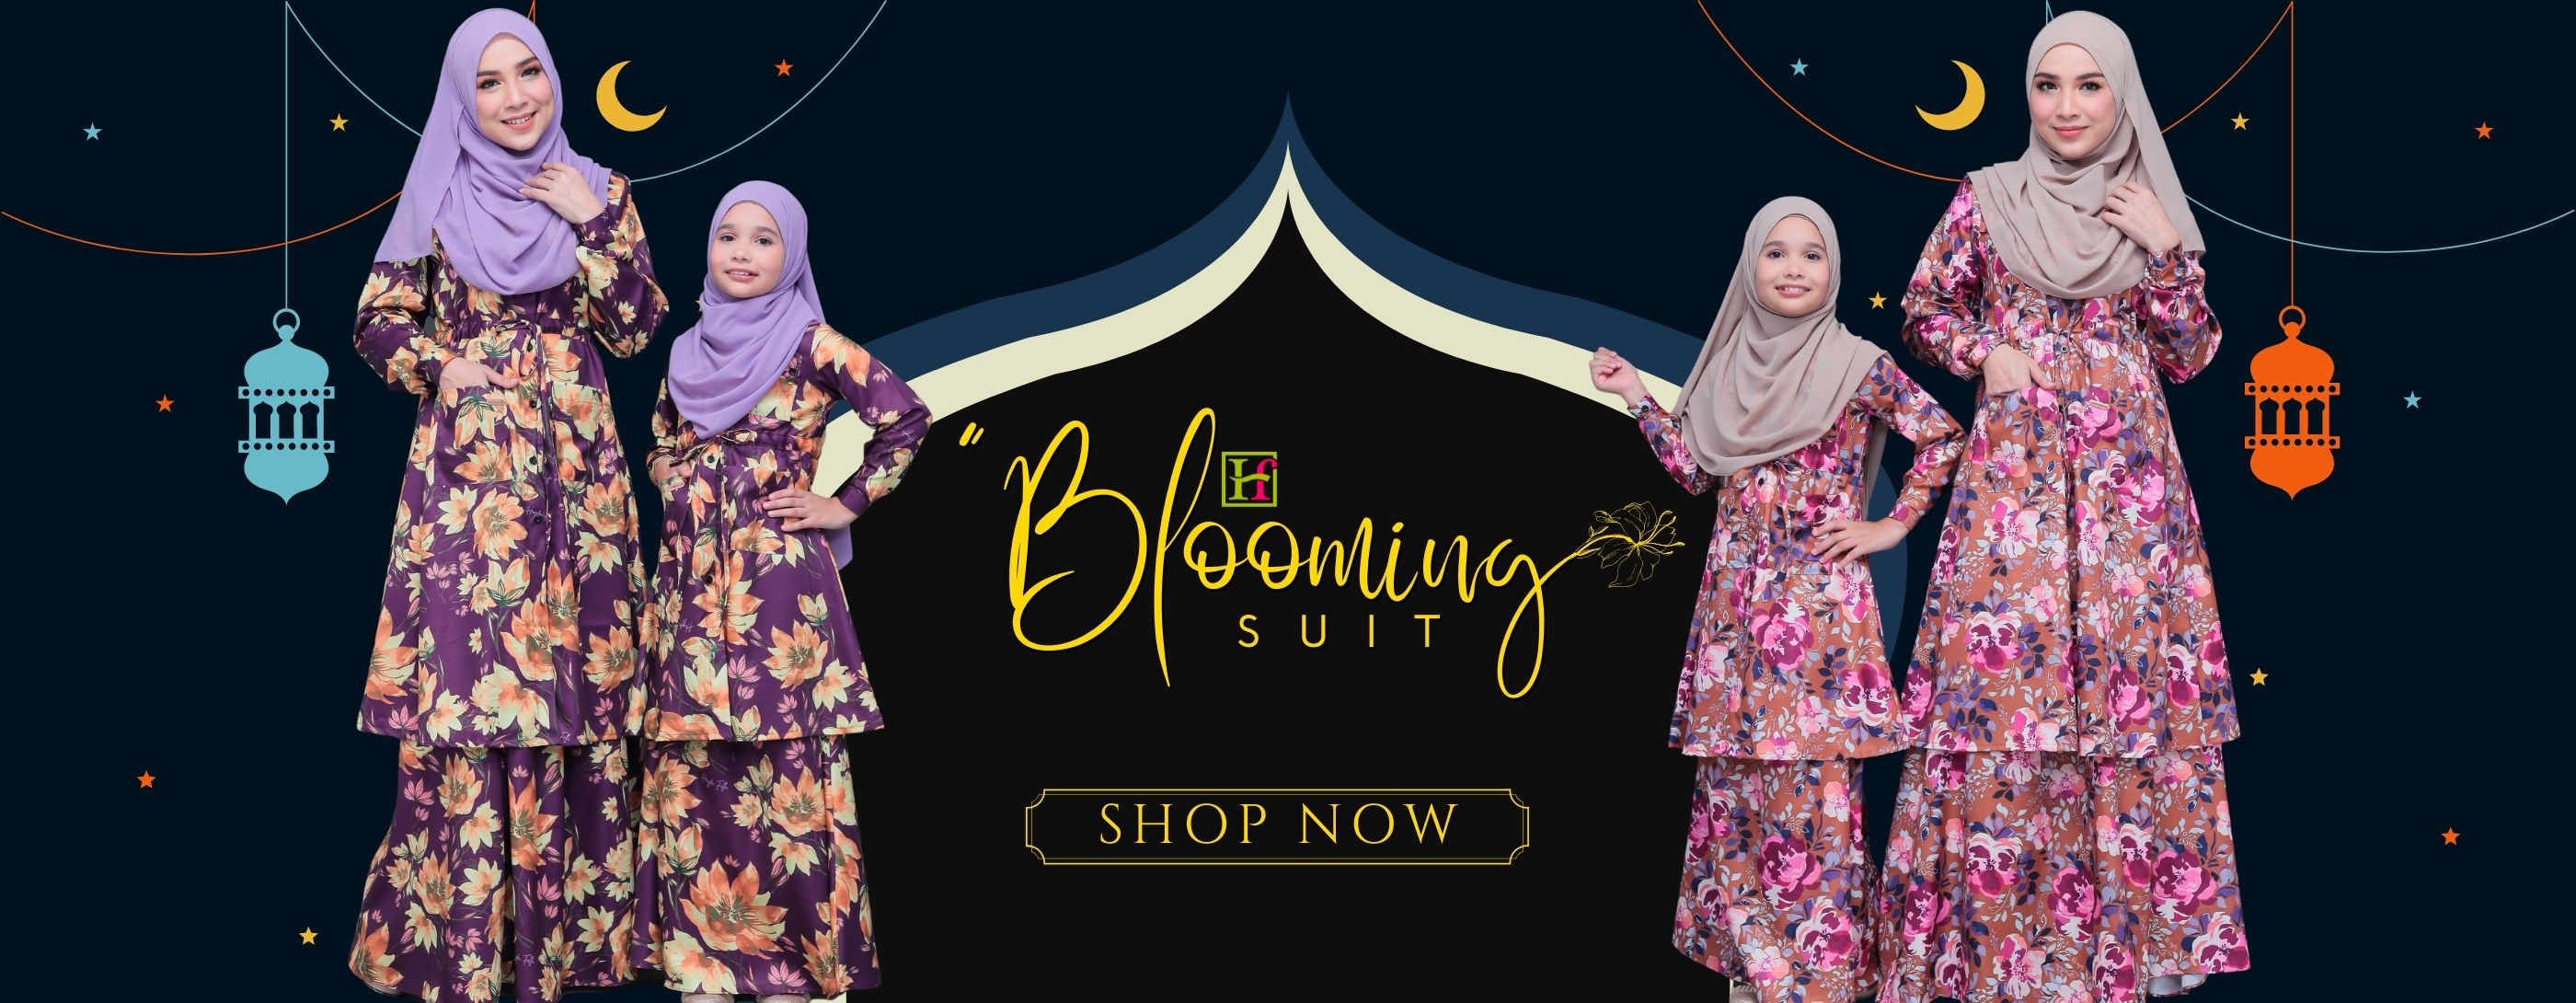 Blooming Suit